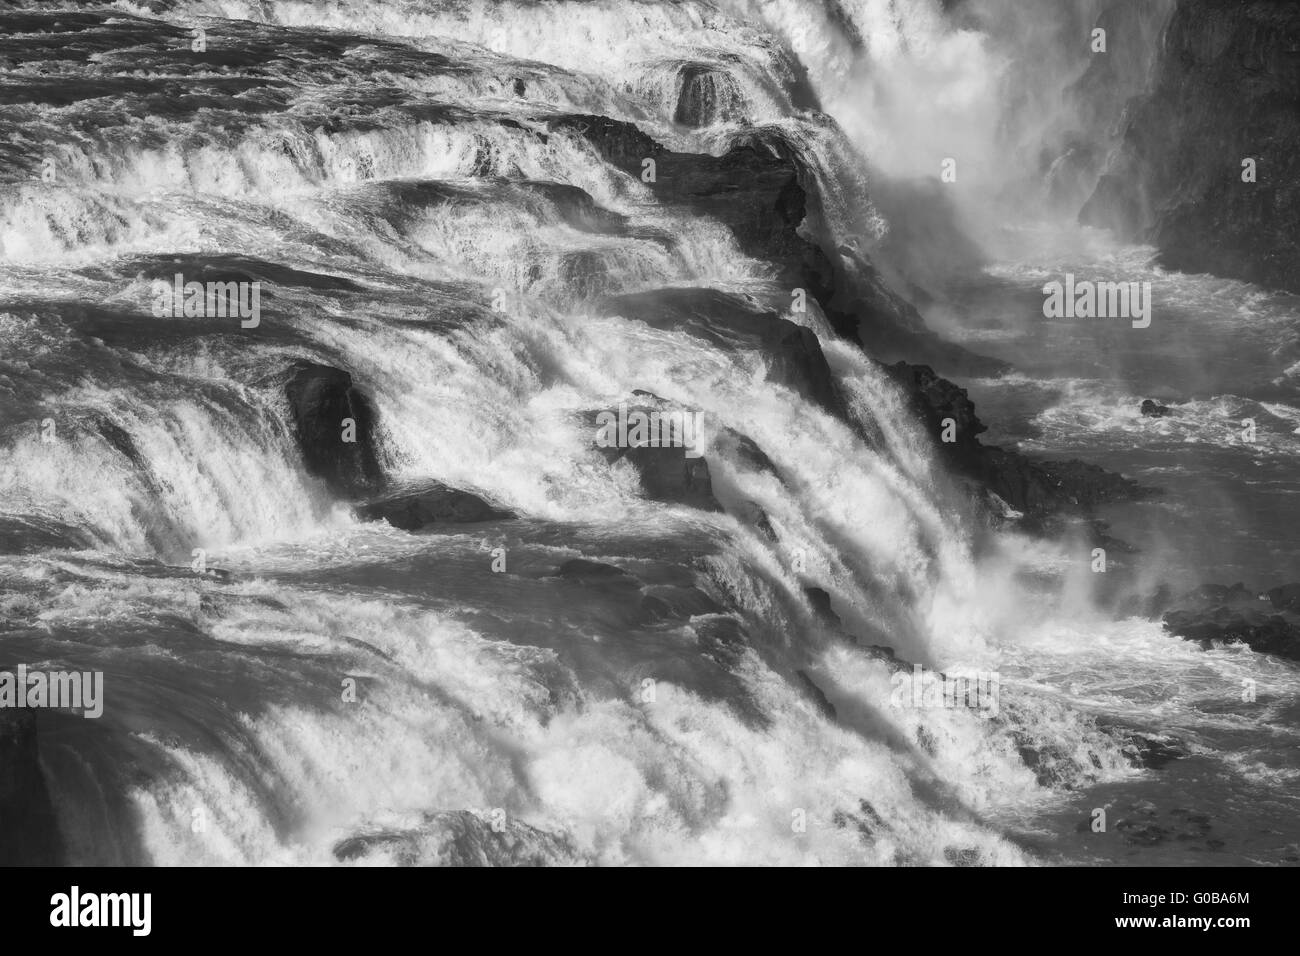 Cascade de Gullfoss, noir et blanc, de l'Islande Banque D'Images